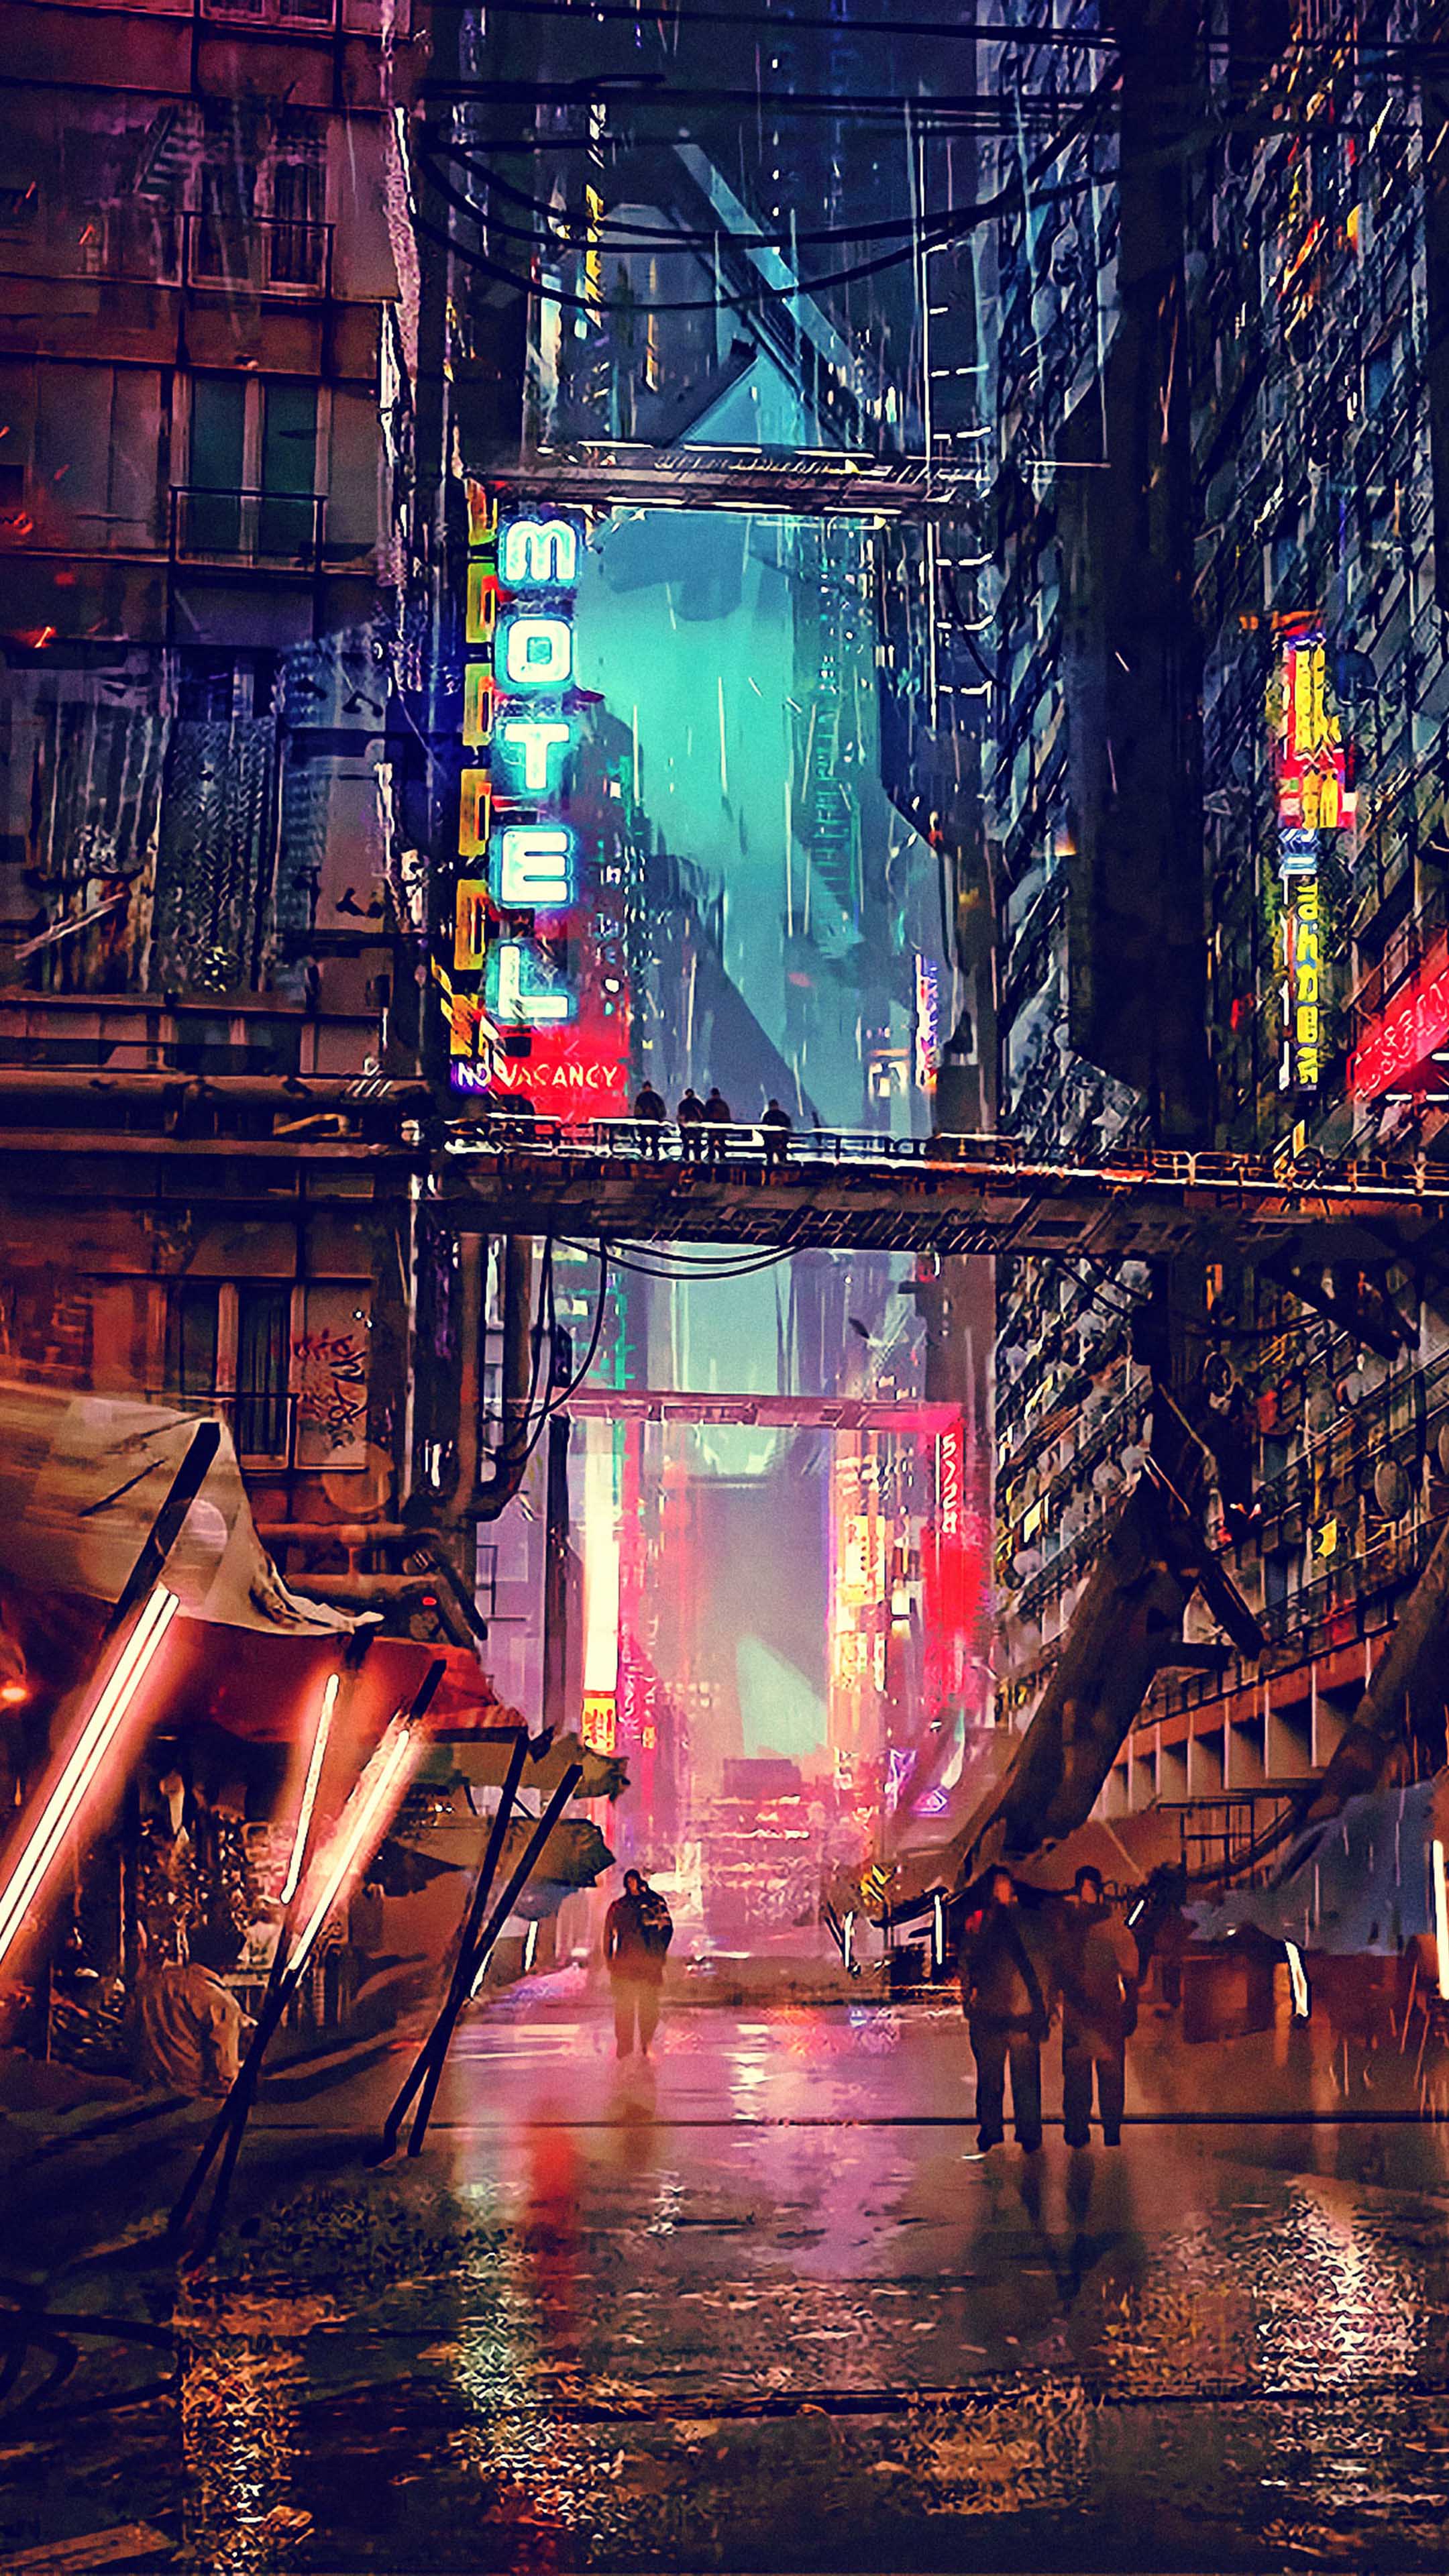 Joker Wallpaper Hd Download For Android Mobile 2020 - Sci-fi Cyberpunk ...